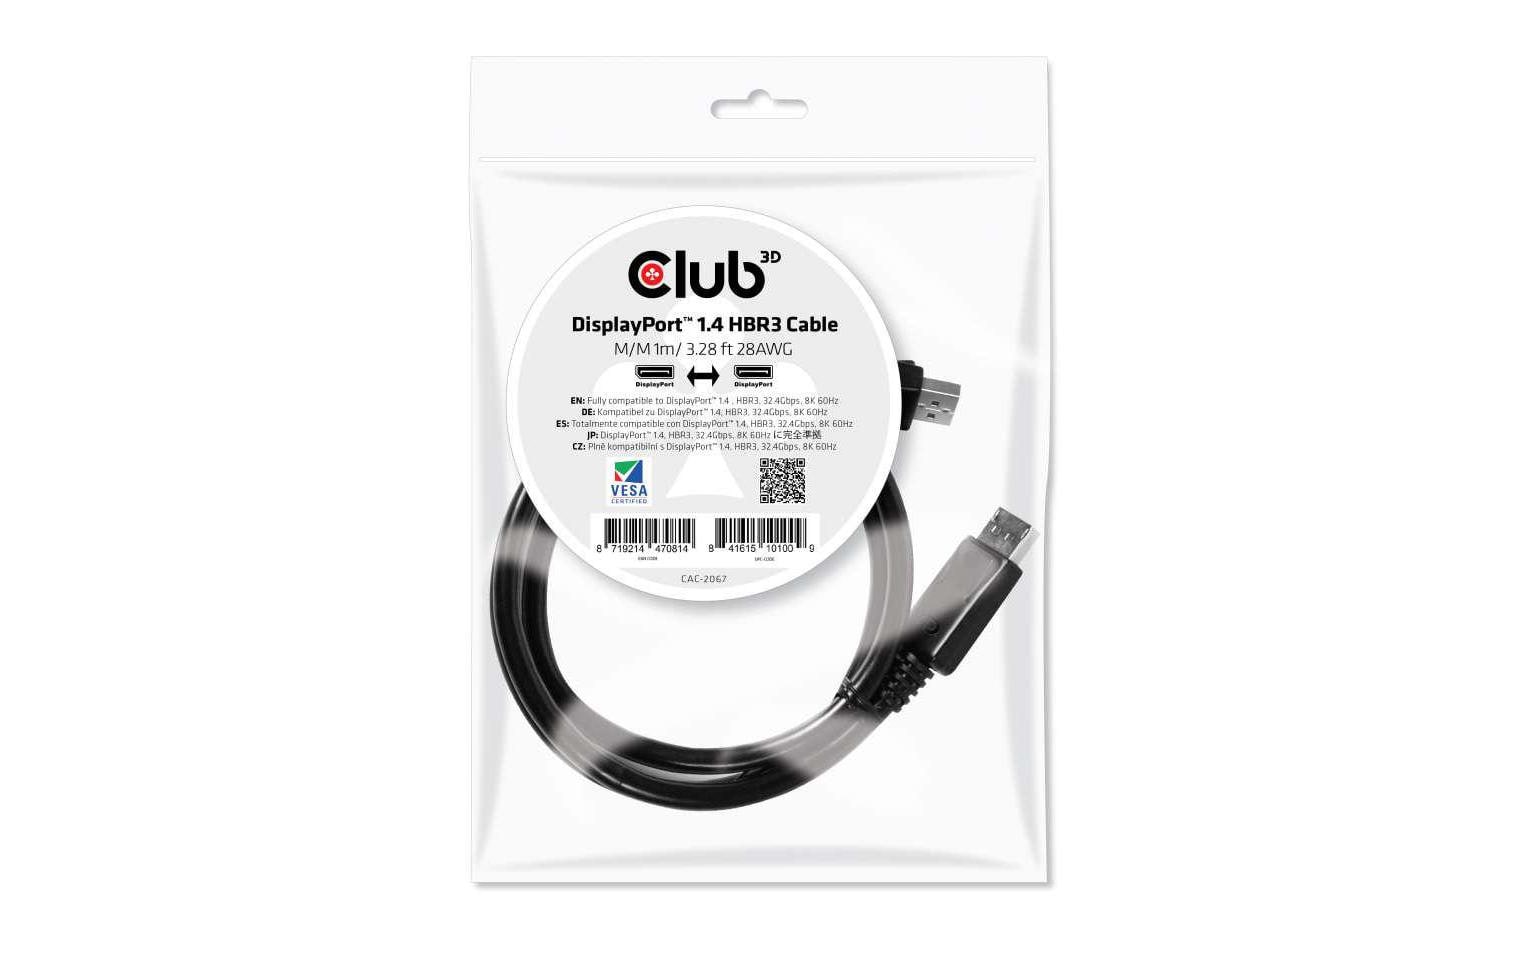 Club 3D Kabel HBR3 DisplayPort 1.4 - DisplayPort, 1 m